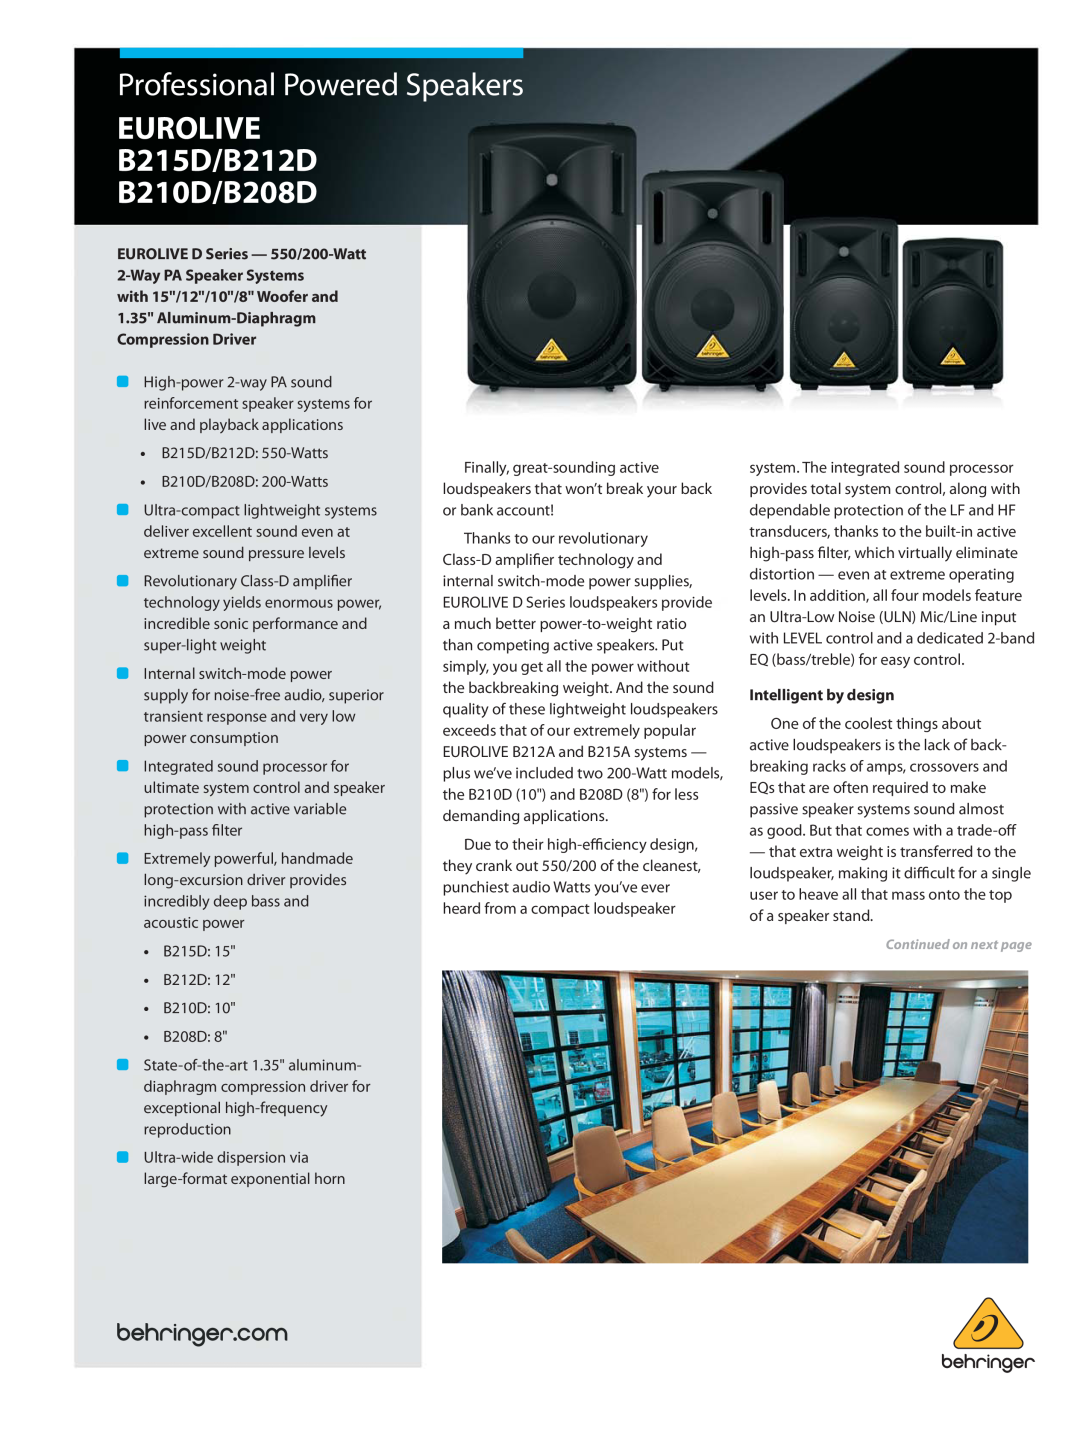 Behringer manual EUROLIVE B215D/B212D B210D/B208D, Intelligent by design, Professional Powered Speakers 